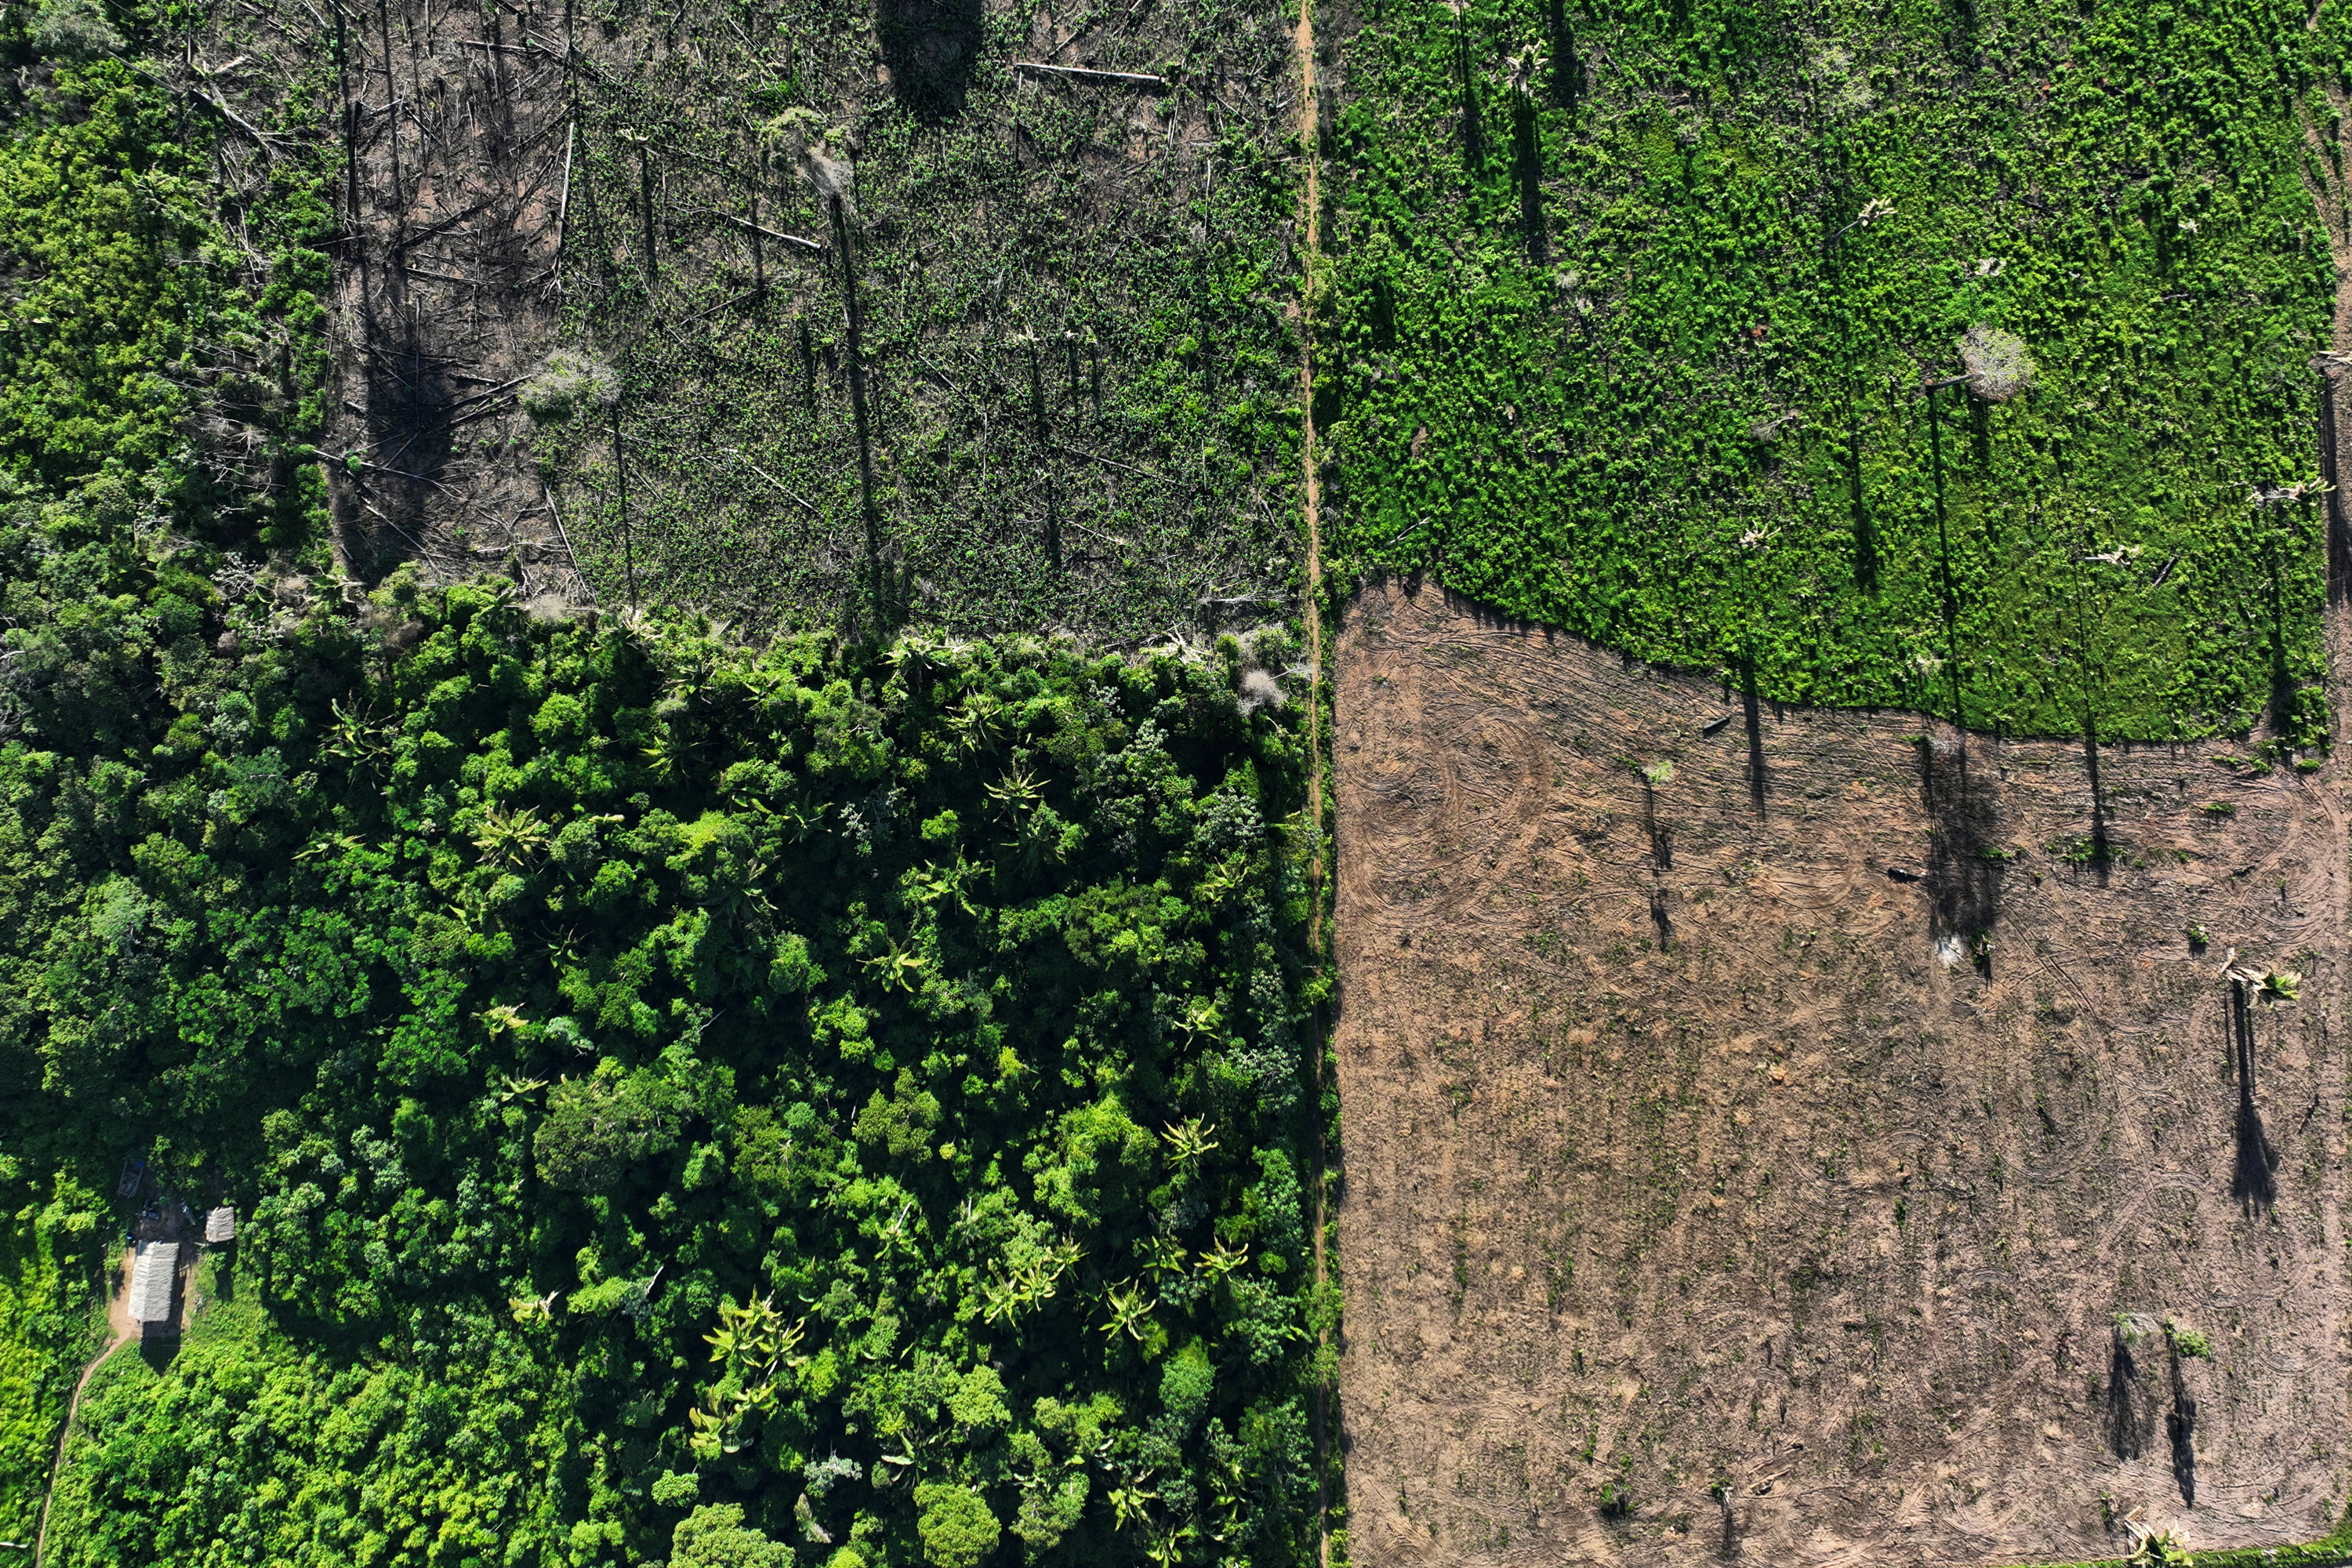 Operation to combat deforestation in Uruara